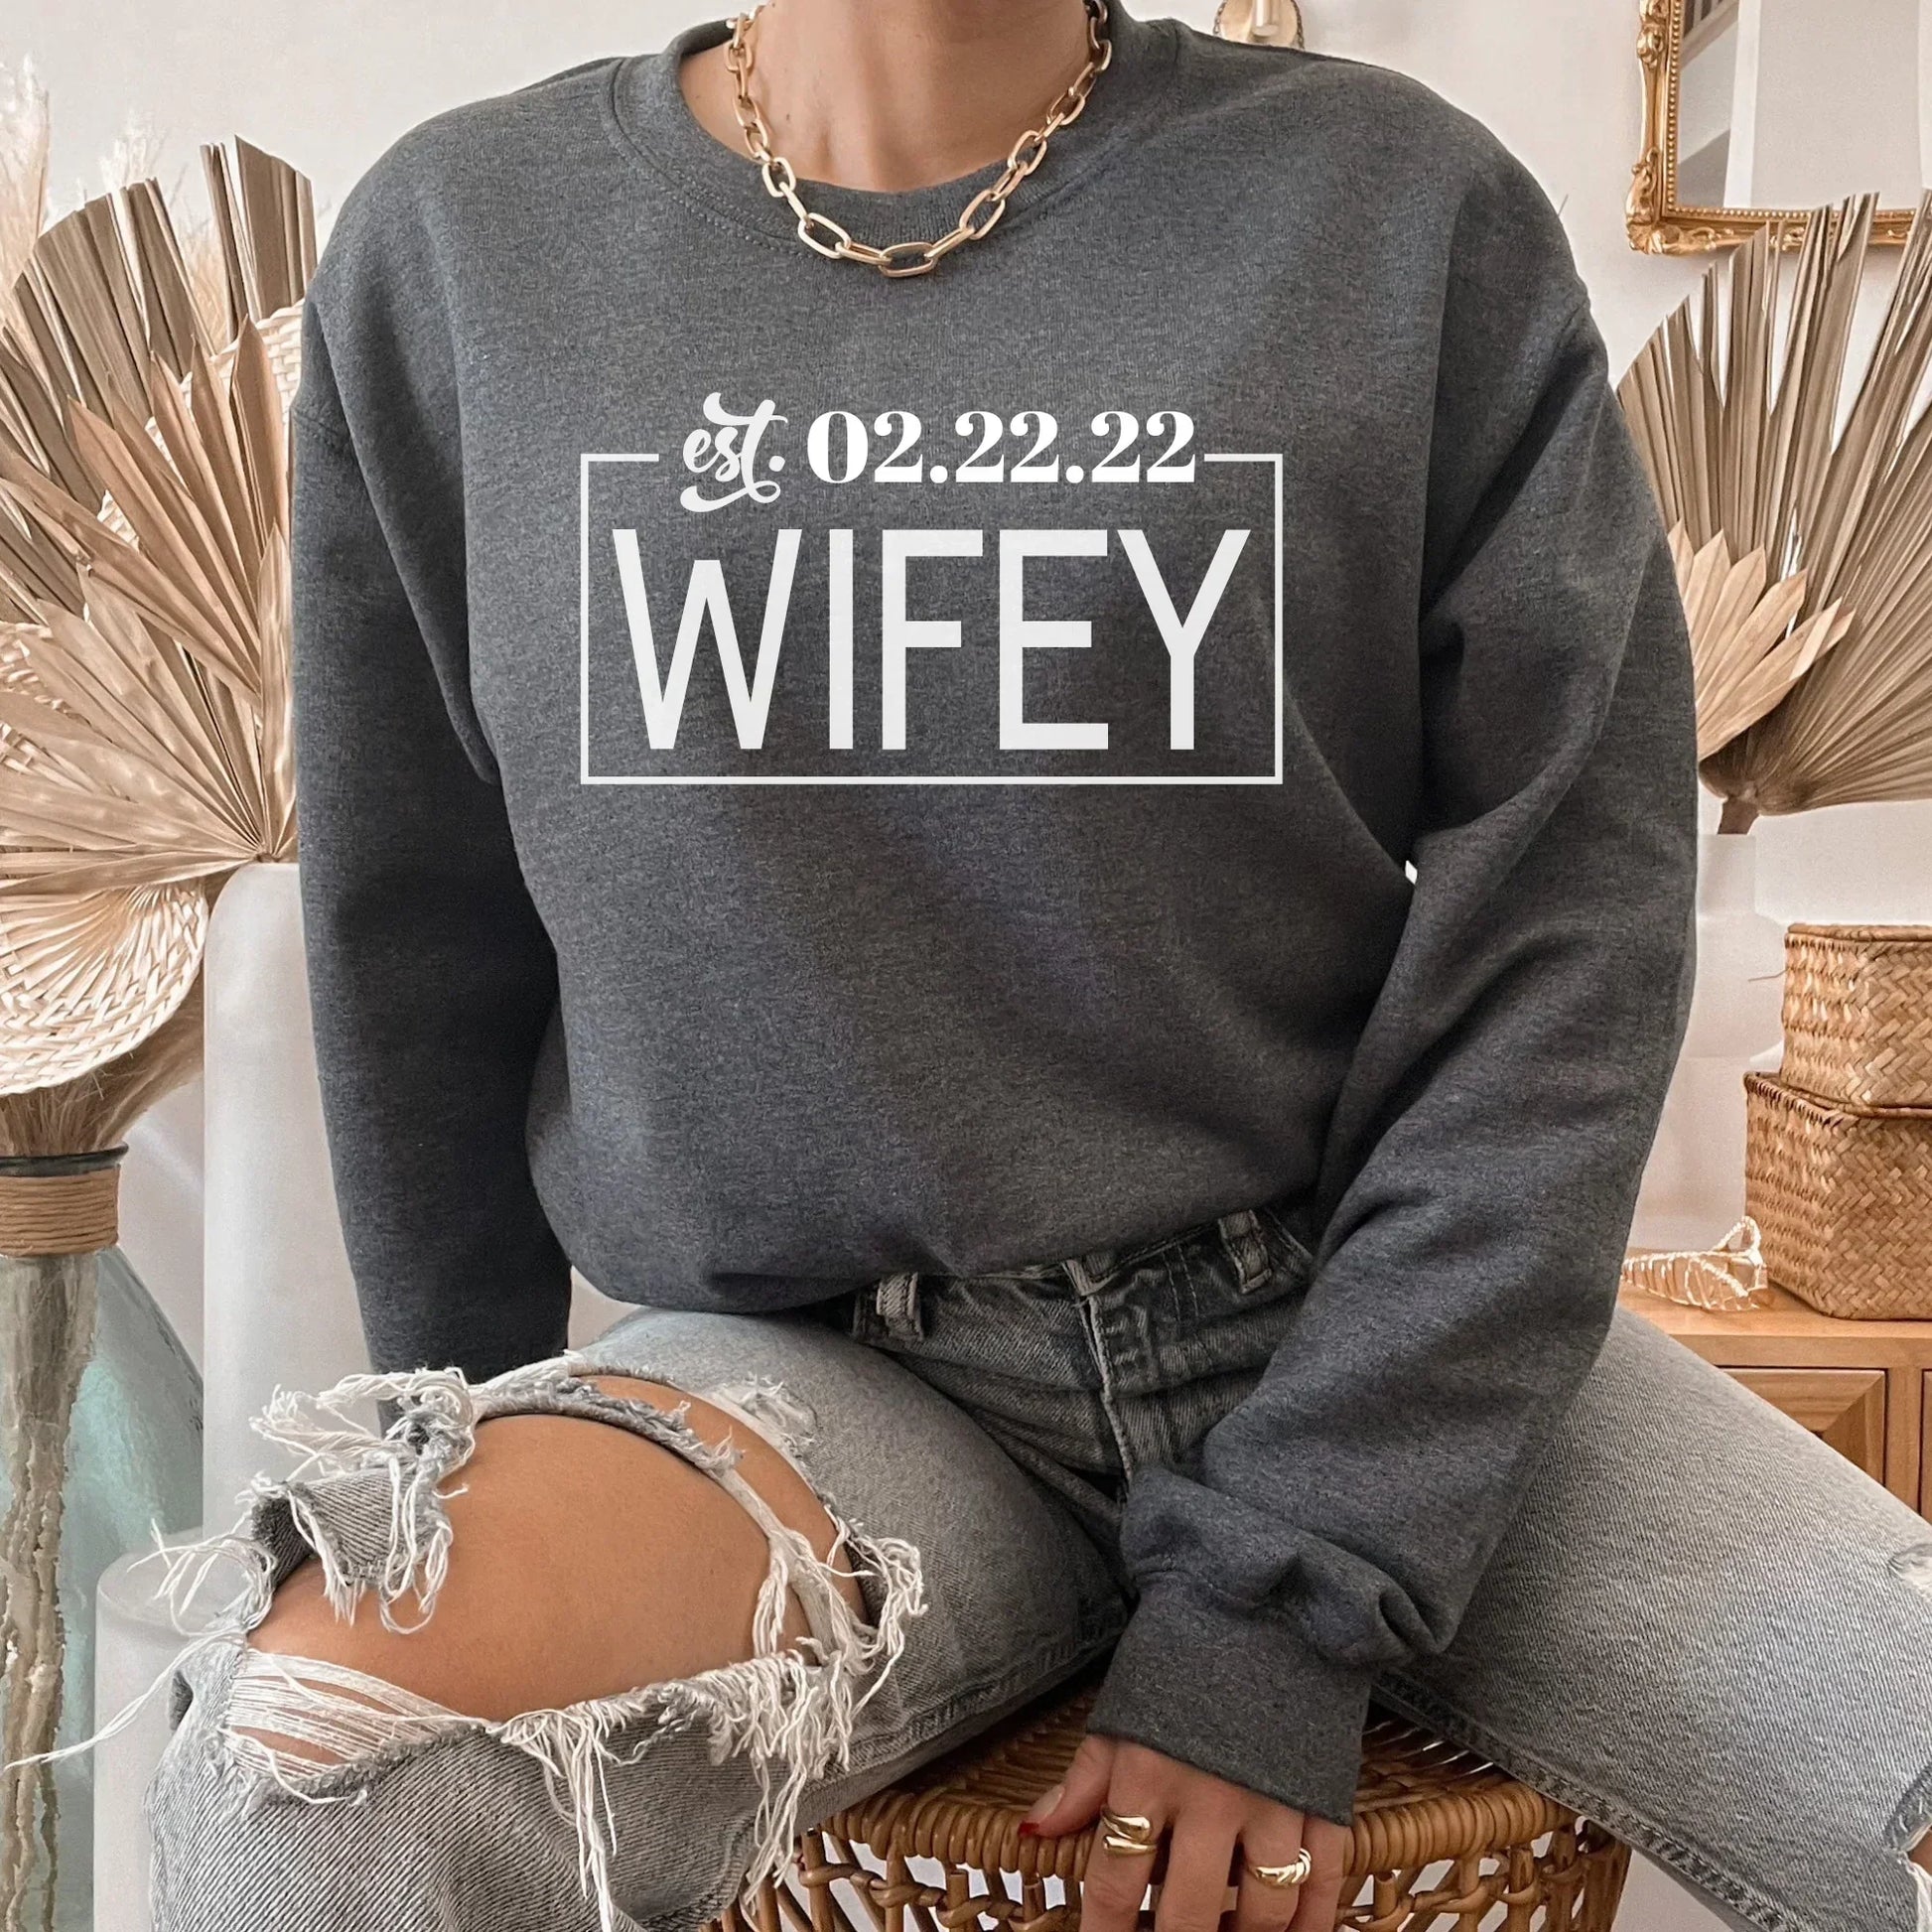 Wife Shirt, Wife Sweatshirt, Future Mrs Shirt, Bride Shirt, Hubby Wifey Shirts, Wifey Hubby Shirts, Wifey Gift, Wifey Sweaters, Wifey Hoodie